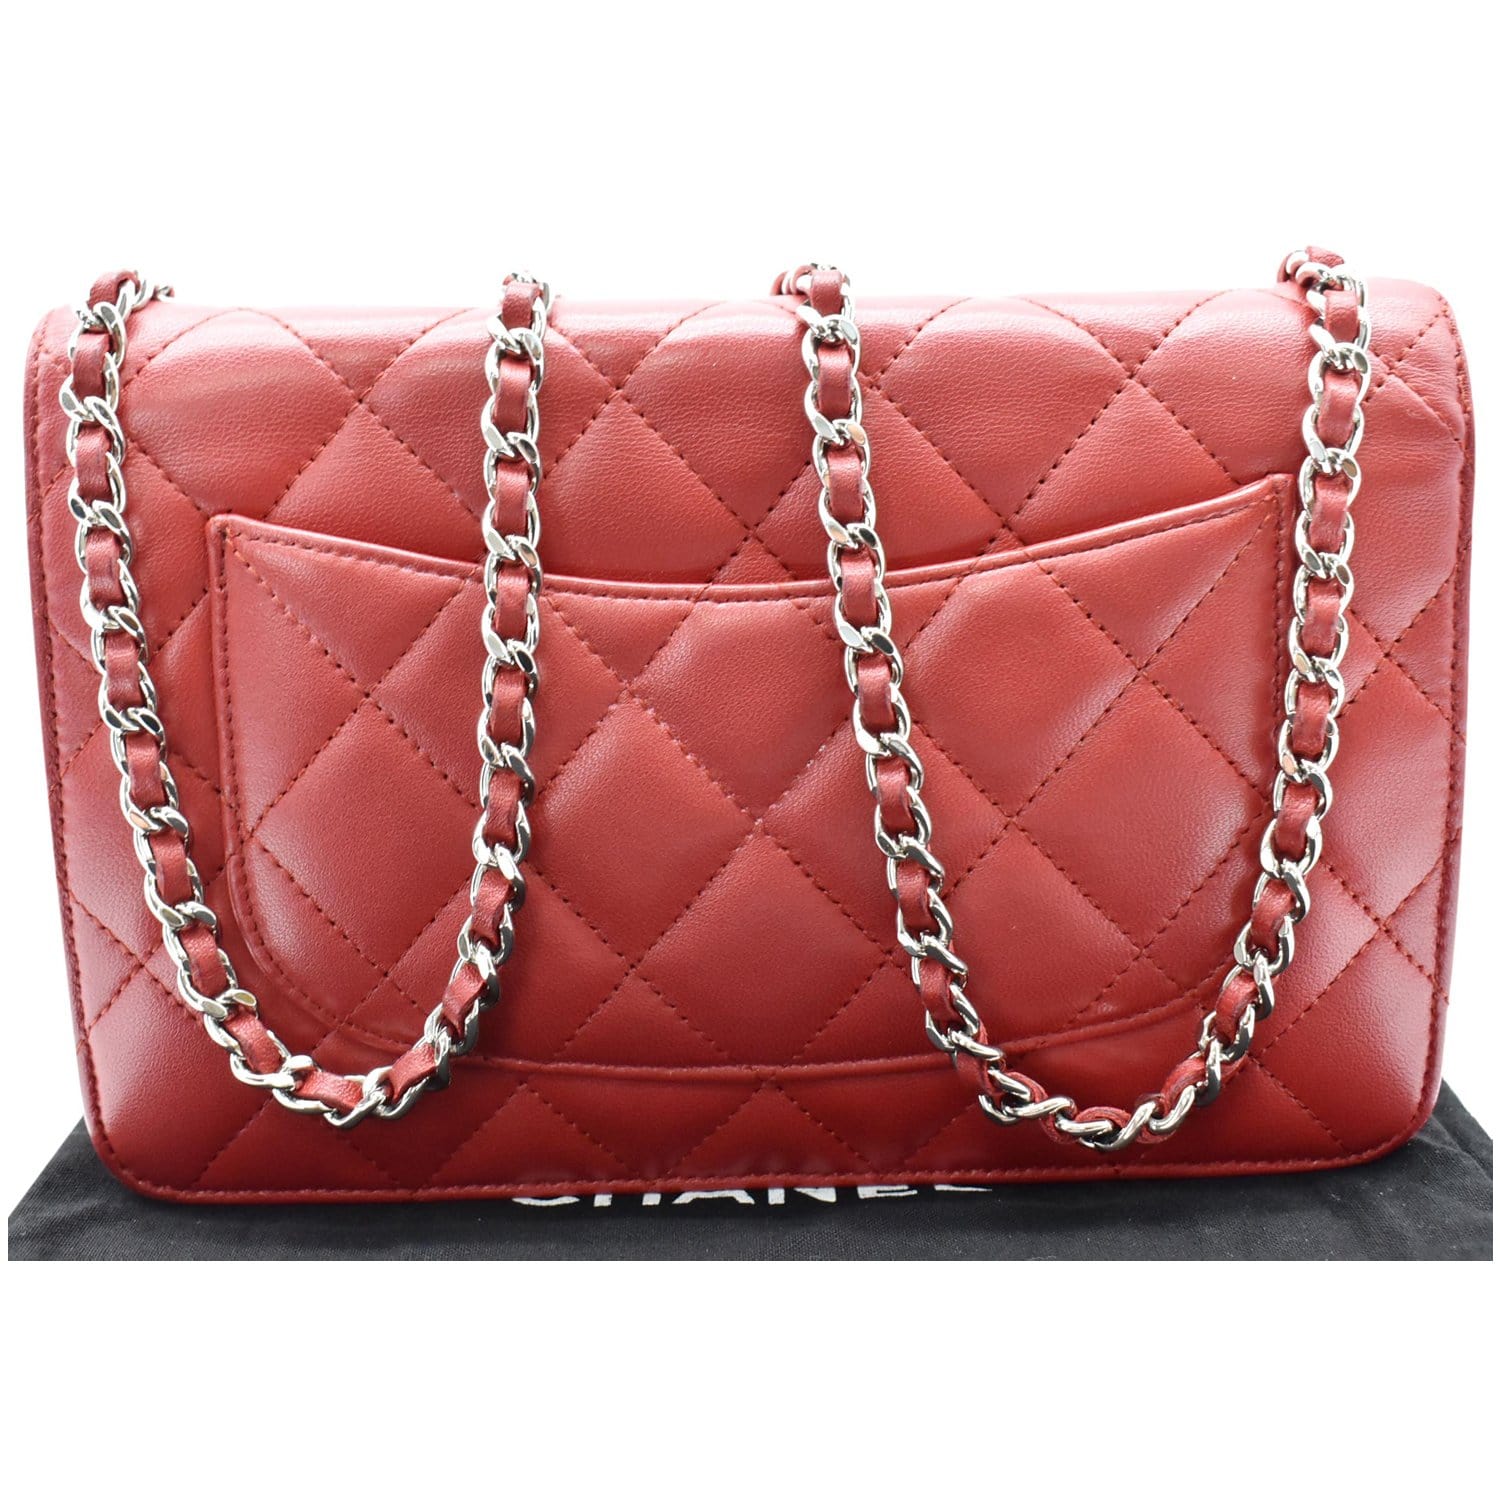 Buy Women Leather Shoulder Bags + Great Price - Arad Branding